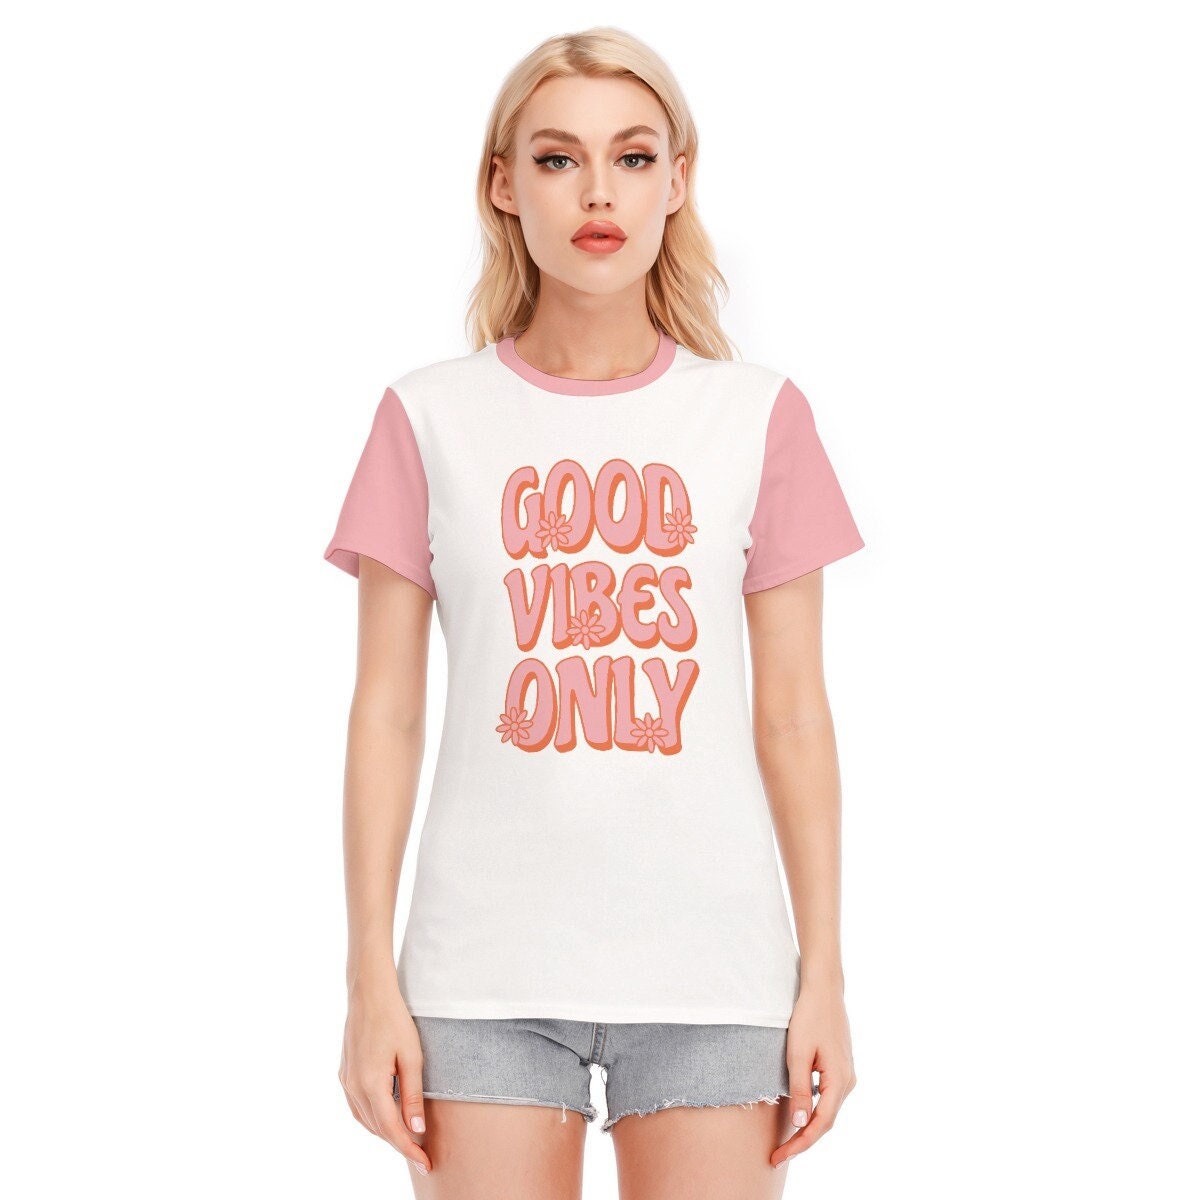 Retro-T-Shirt, T-Shirts mit Wörtern, Vintage-T-Shirt mit Wörtern, rosa T-Shirt mit Wörtern, Hippie-T-Shirt für Damen, T-Shirt im Vintage-Stil, weiß-rosa T-Shirt